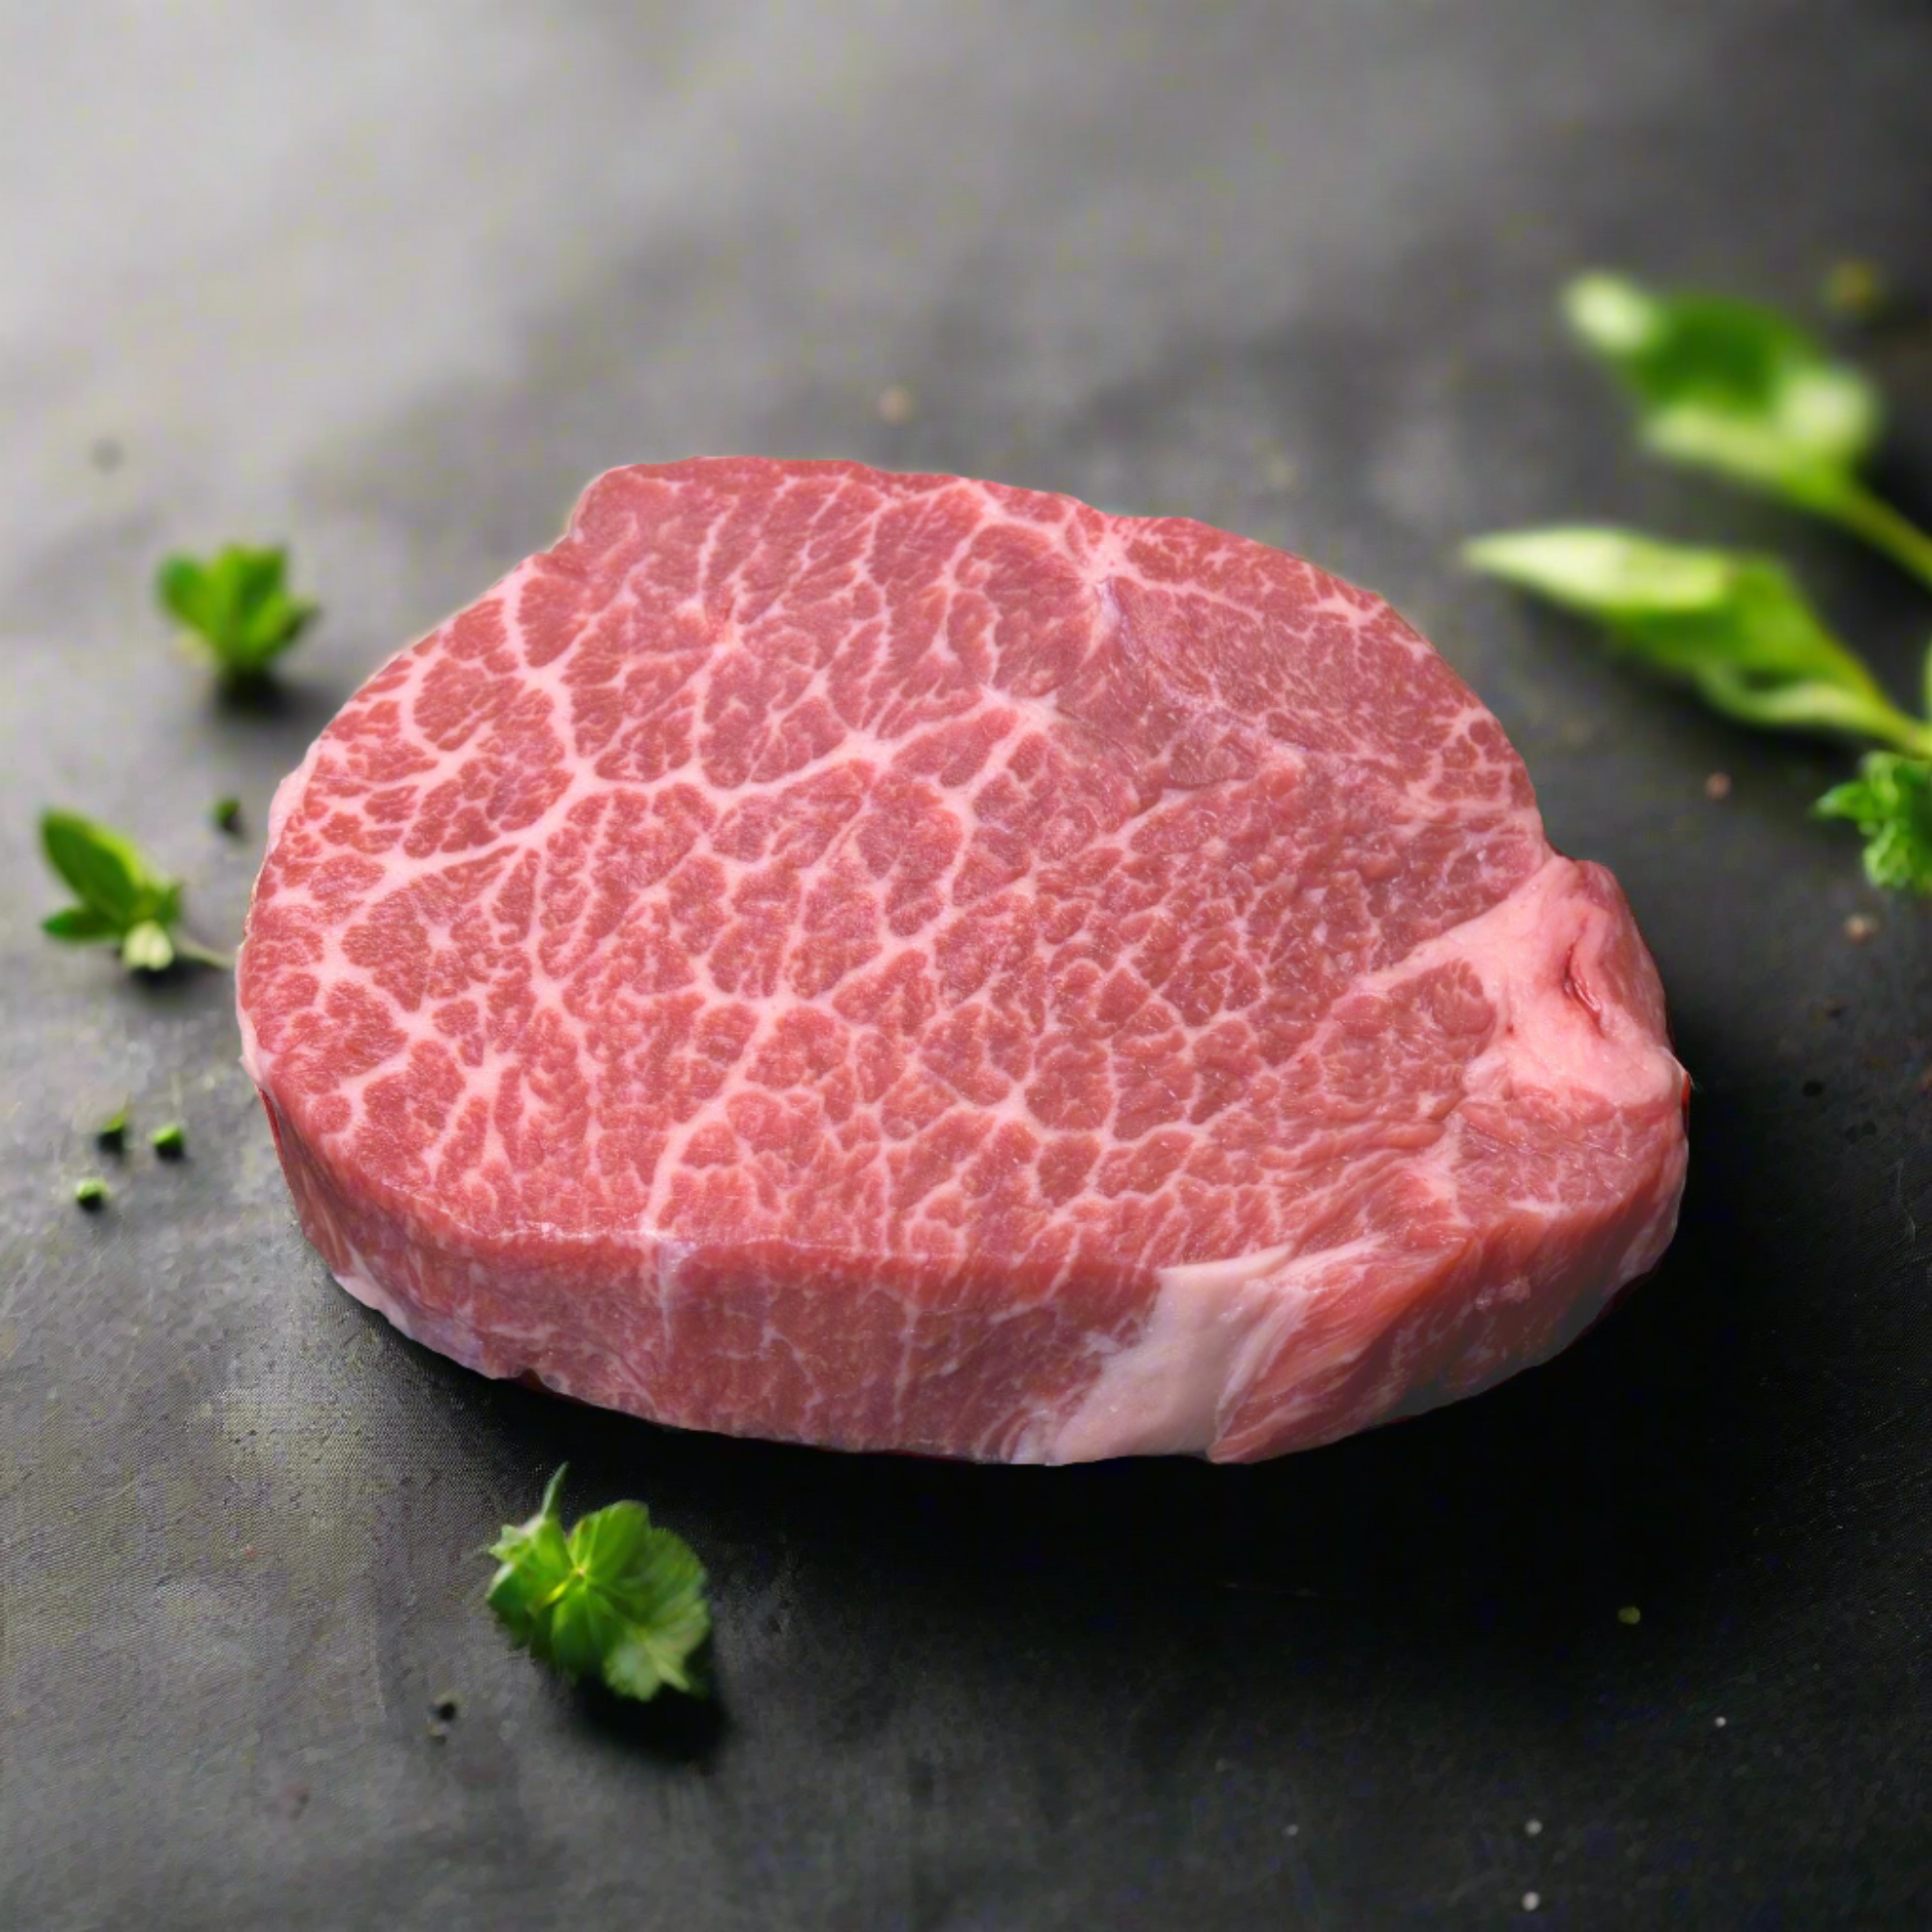 Yugo Wagyu Beef Tenderloin Steak MB 4/5 เนื้อวากิวออสเตรเลีย เทนเดอลอยน์ MB4/5 ตัดสเต็ค - 0